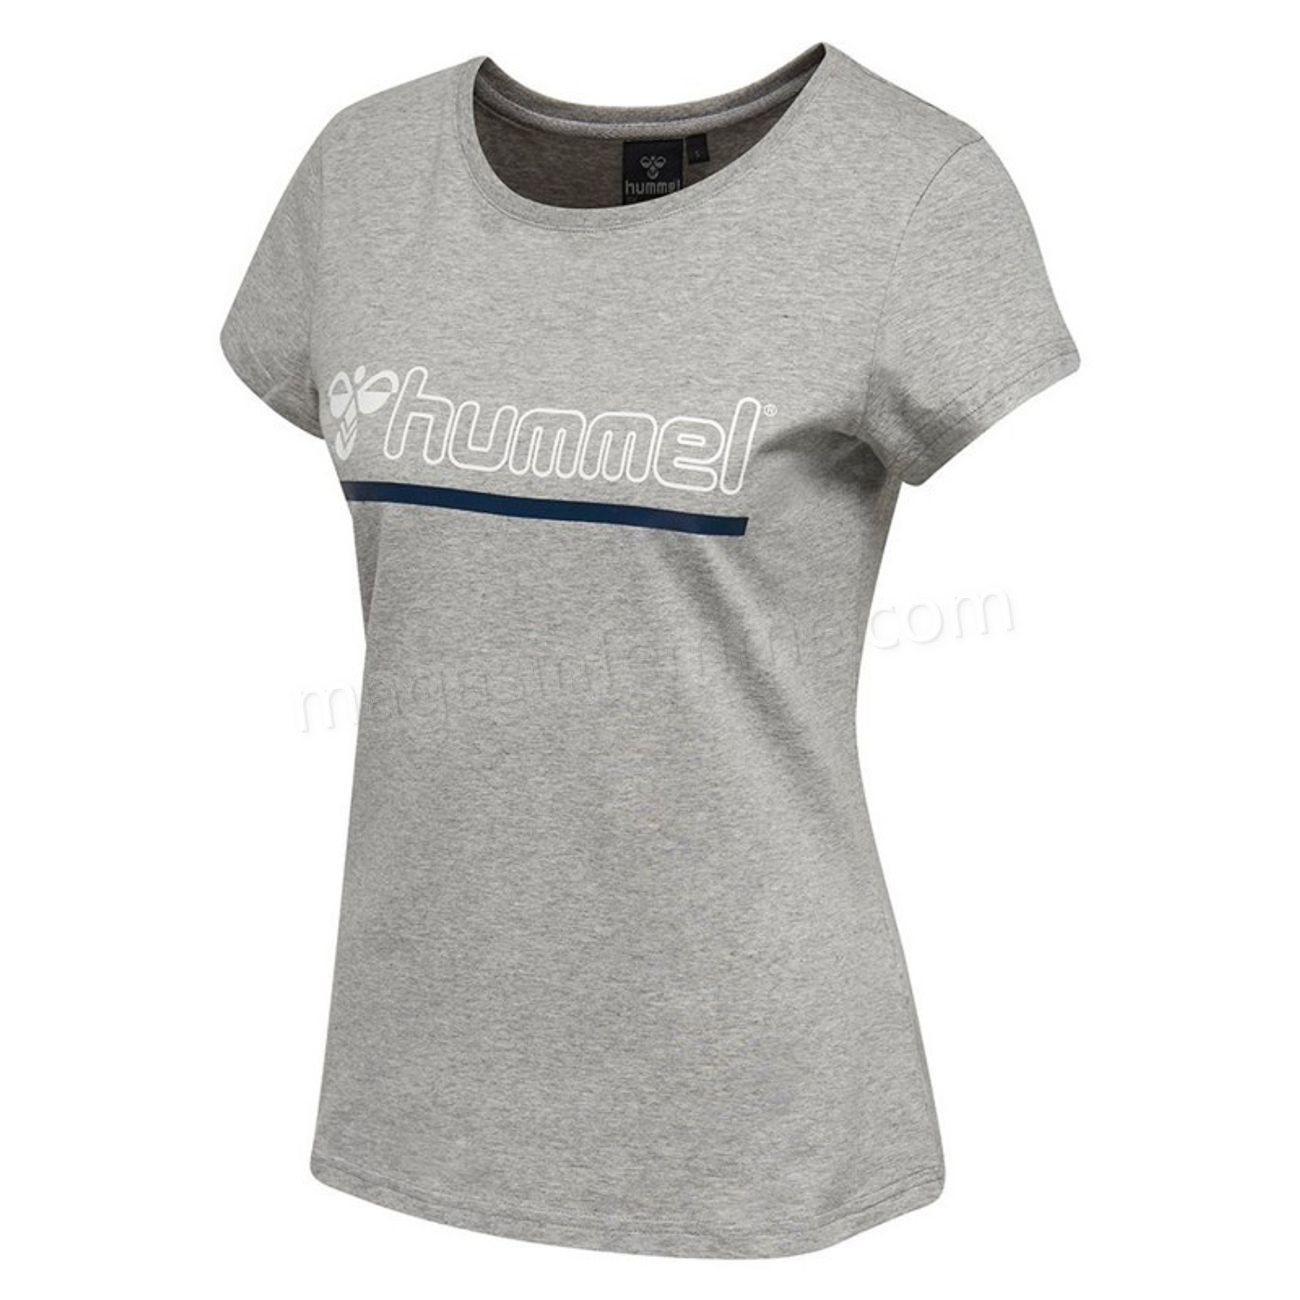 Hummel-Fitness femme HUMMEL T-shirt femme Hummel Classic bee Perla en solde - Hummel-Fitness femme HUMMEL T-shirt femme Hummel Classic bee Perla en solde